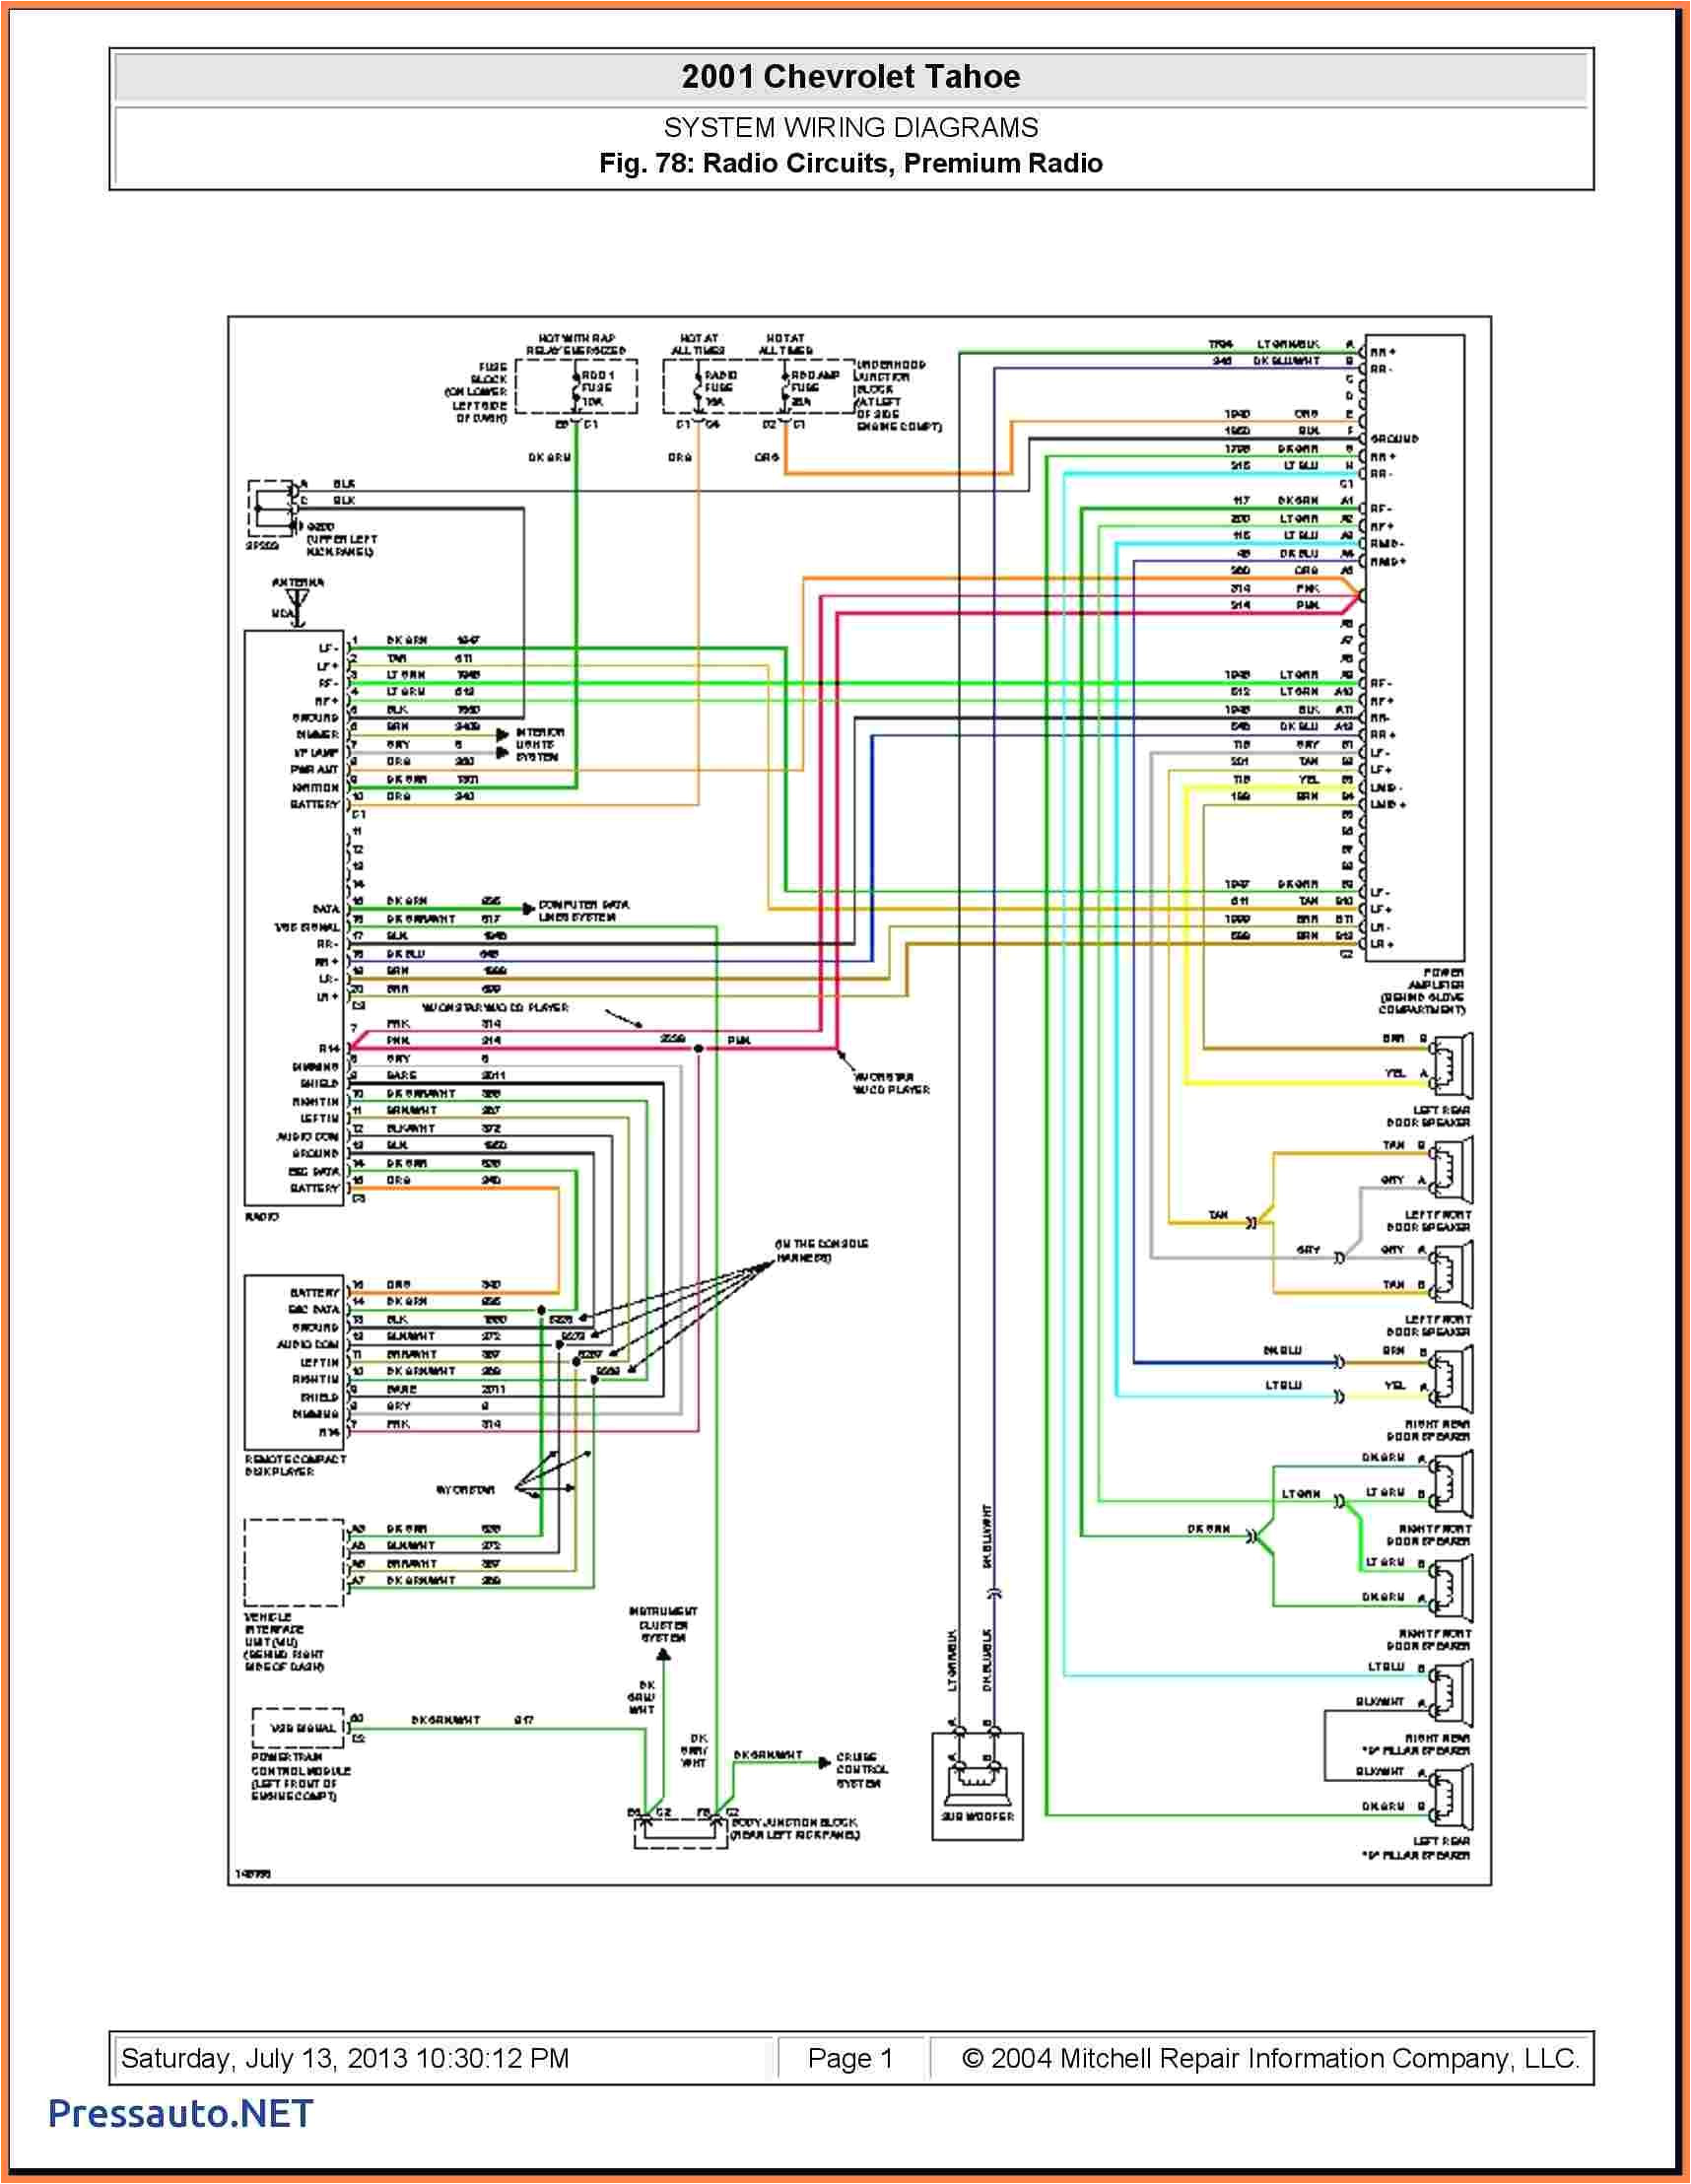 2003 cadillac deville radio wiring diagram new 2002 chevy trailblazer stereo wiring diagram wiring diagram center e280a2 of 2003 cadillac deville radio wiring diagram jpg